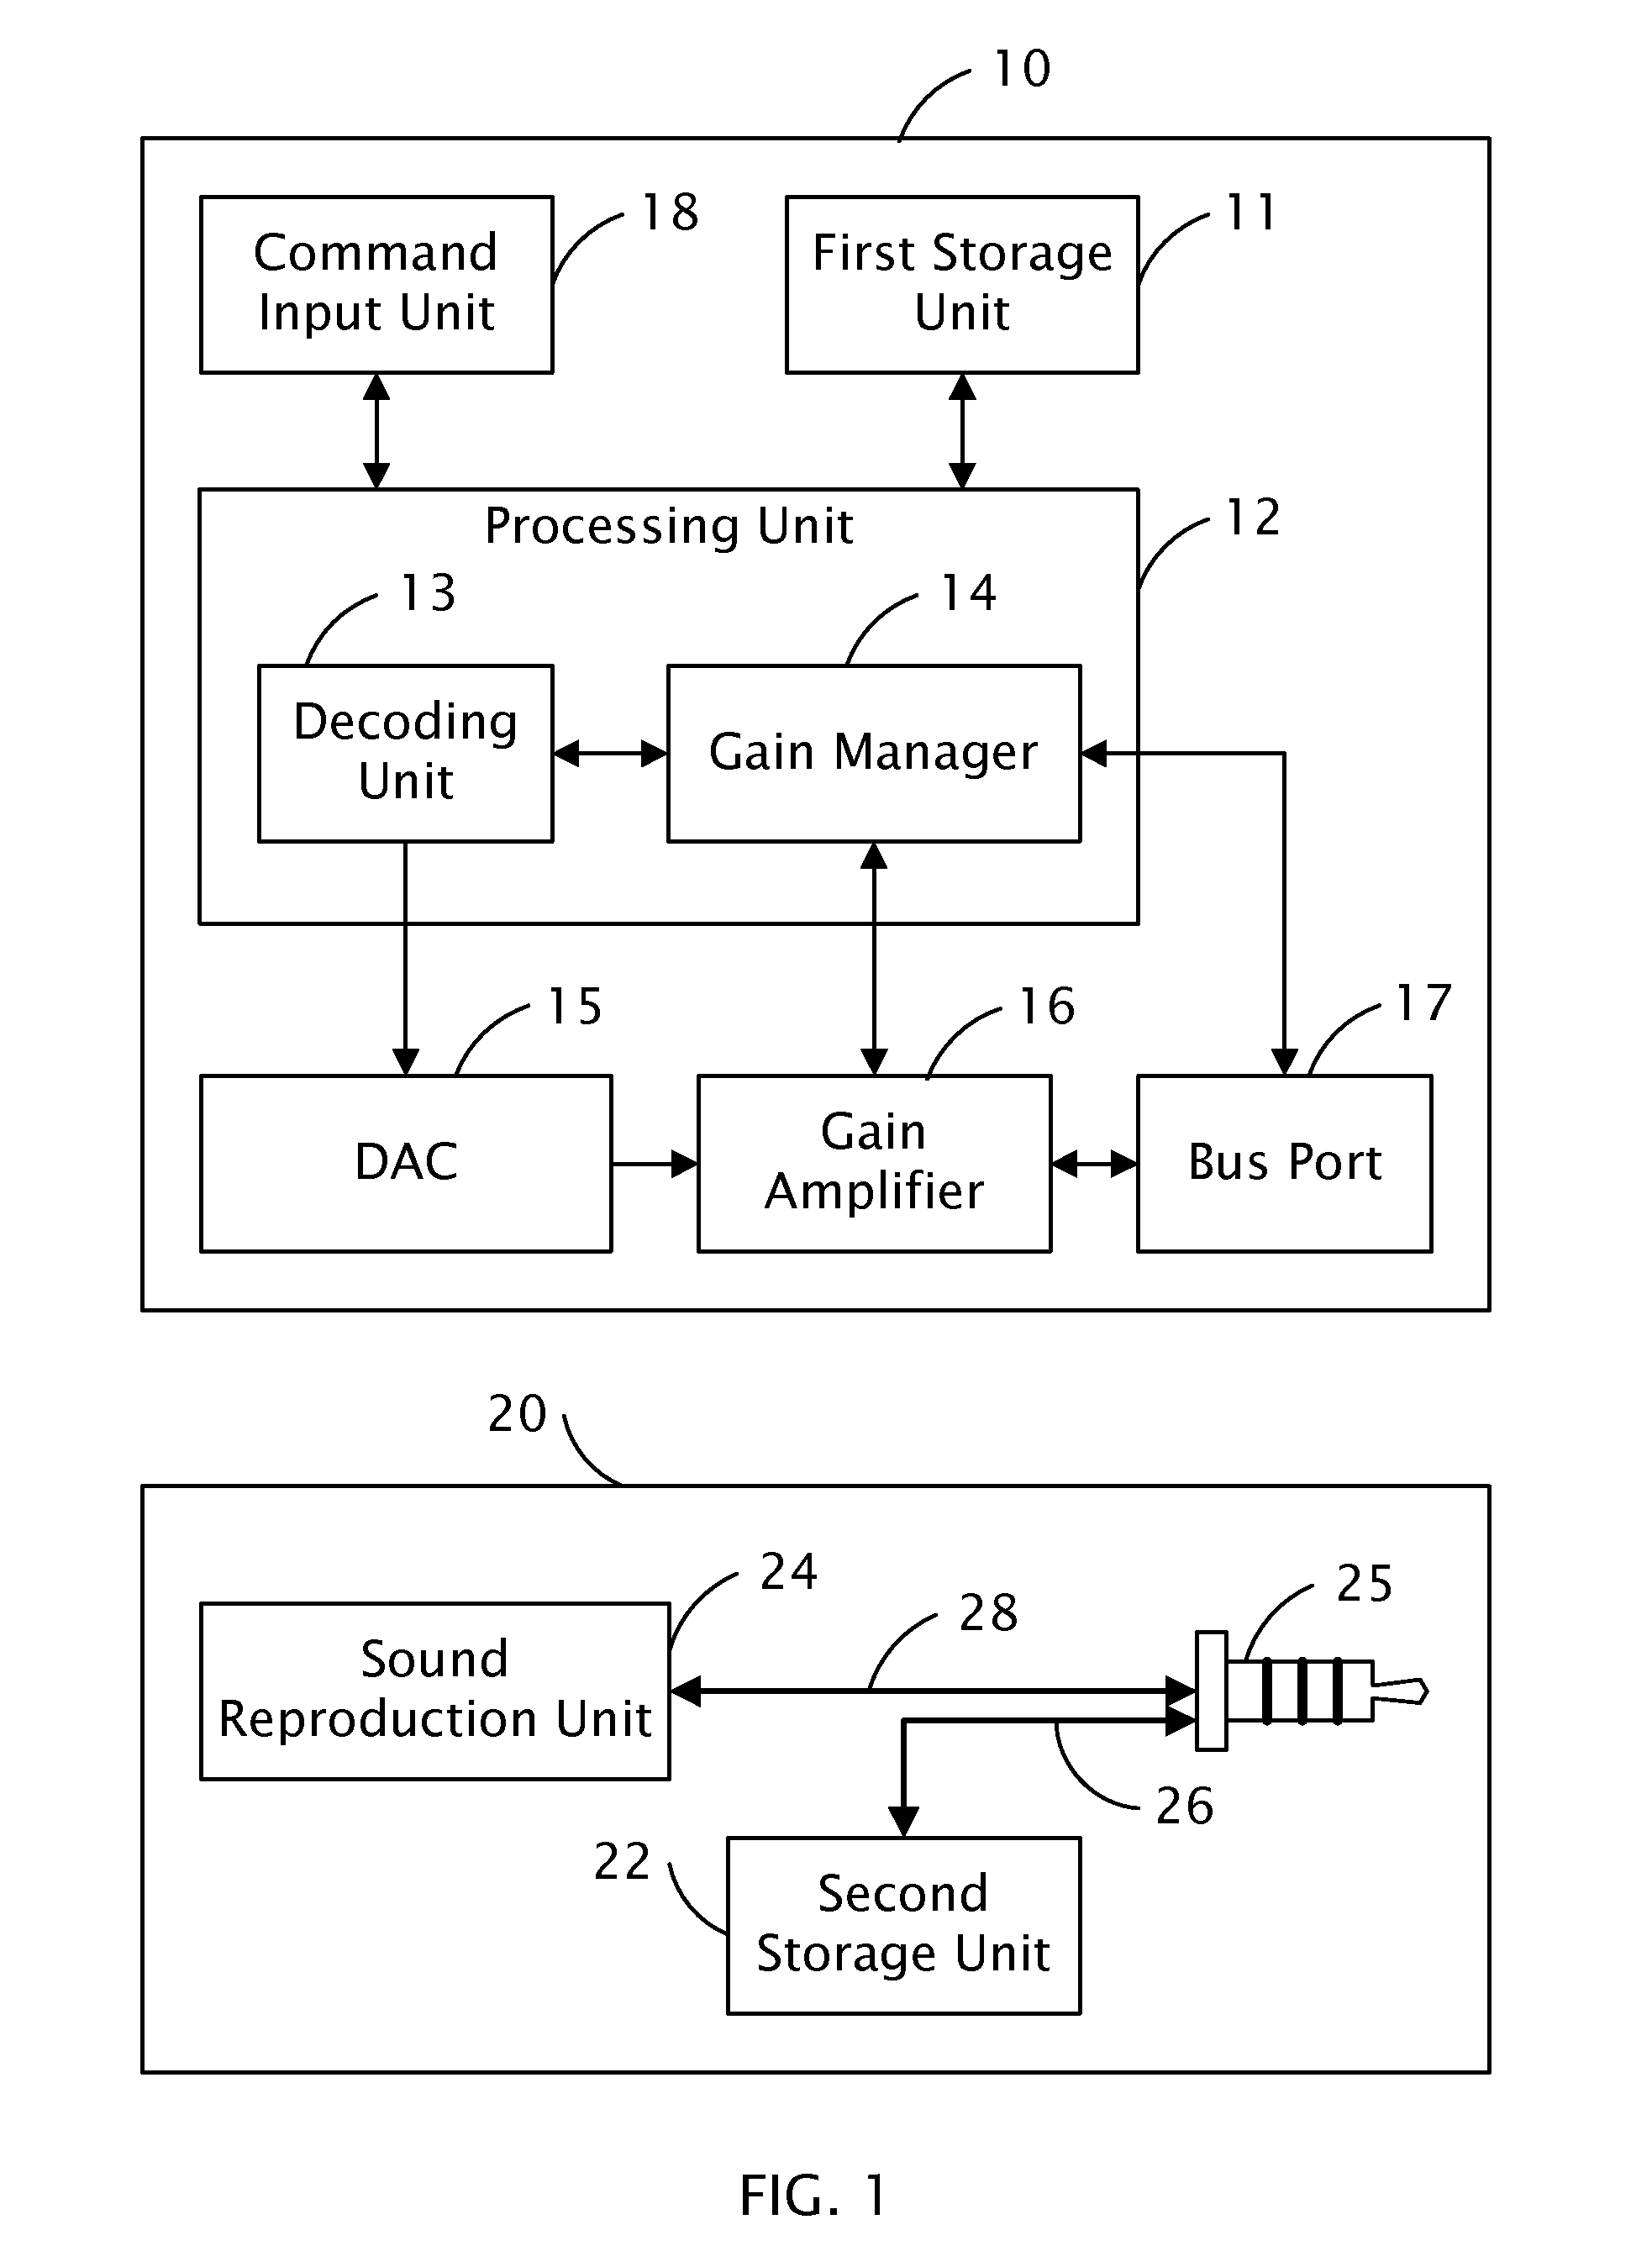 Audio processing apparatus for automatic gain control